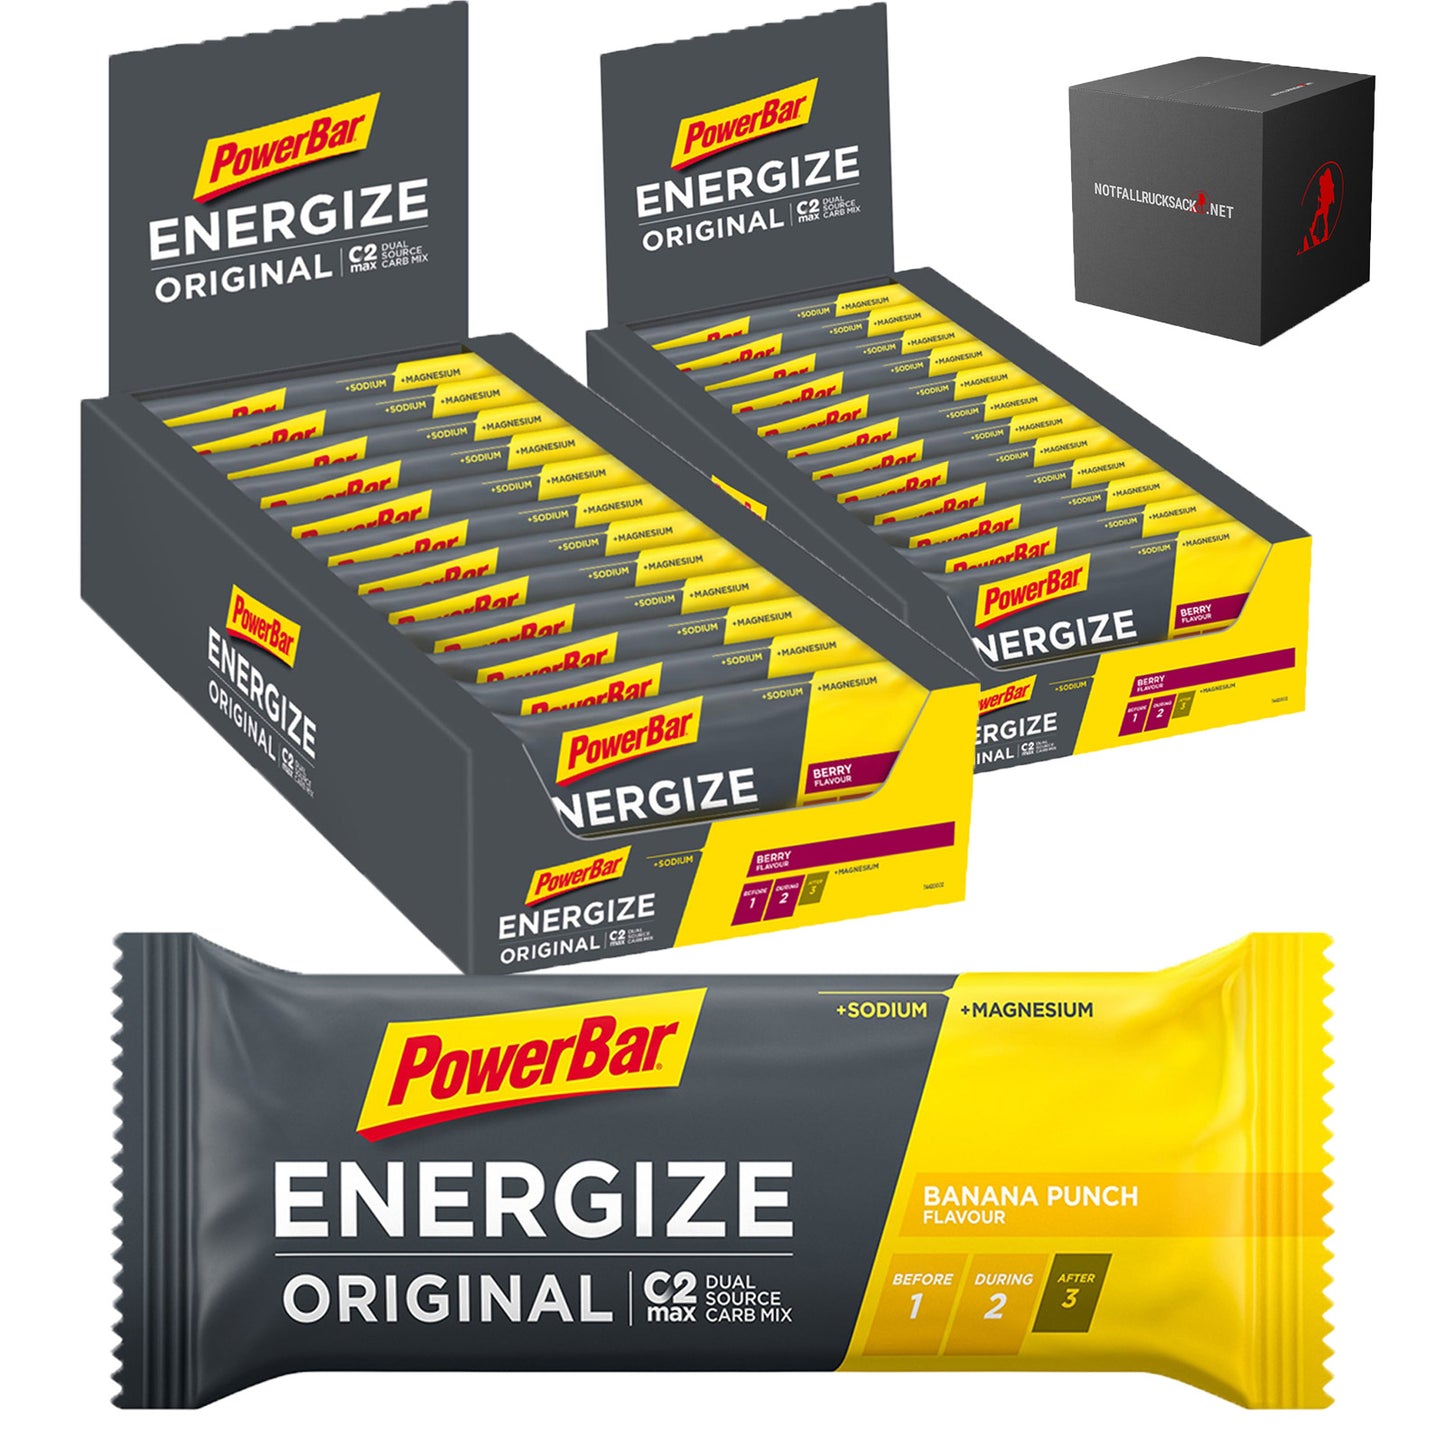 Emergency Power 50 proteinbarer nødforsyning - fire varianter